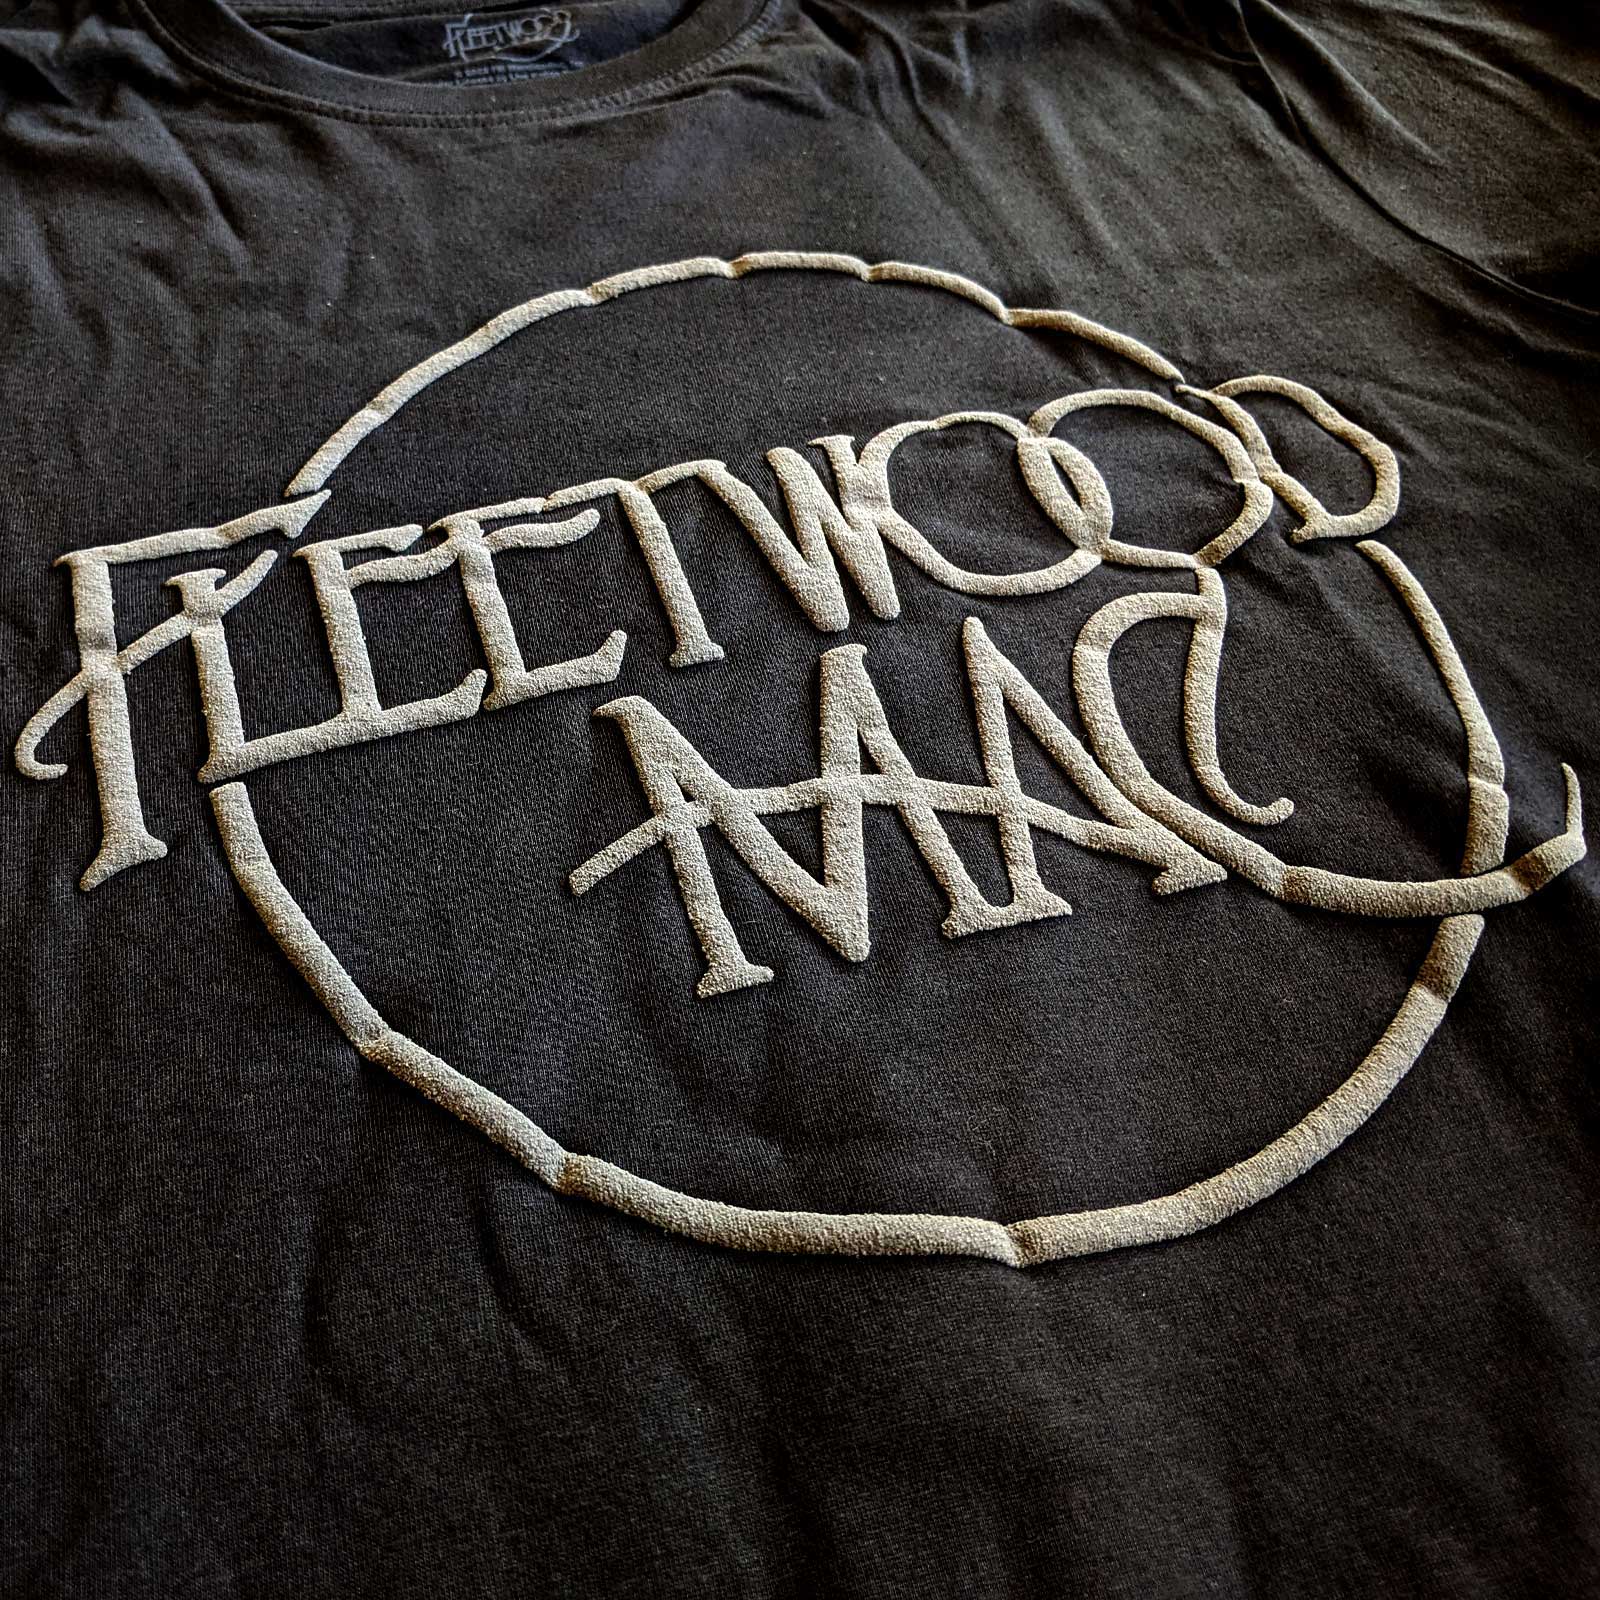 Fleetwood Mac Adult T-Shirt - Classic Logo High Build- Black Official Licensed Design